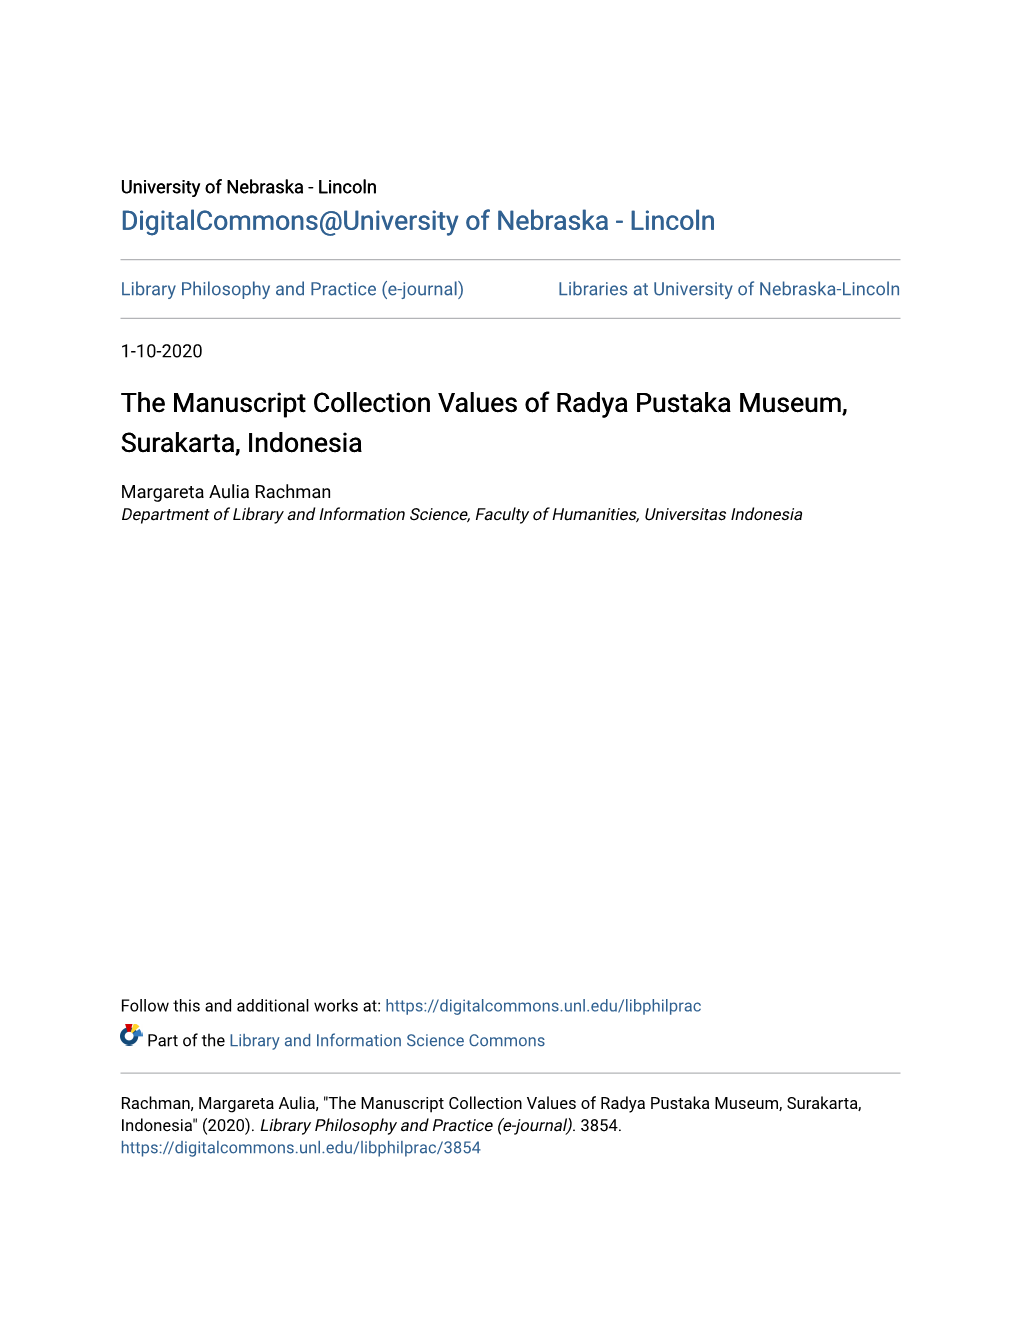 The Manuscript Collection Values of Radya Pustaka Museum, Surakarta, Indonesia